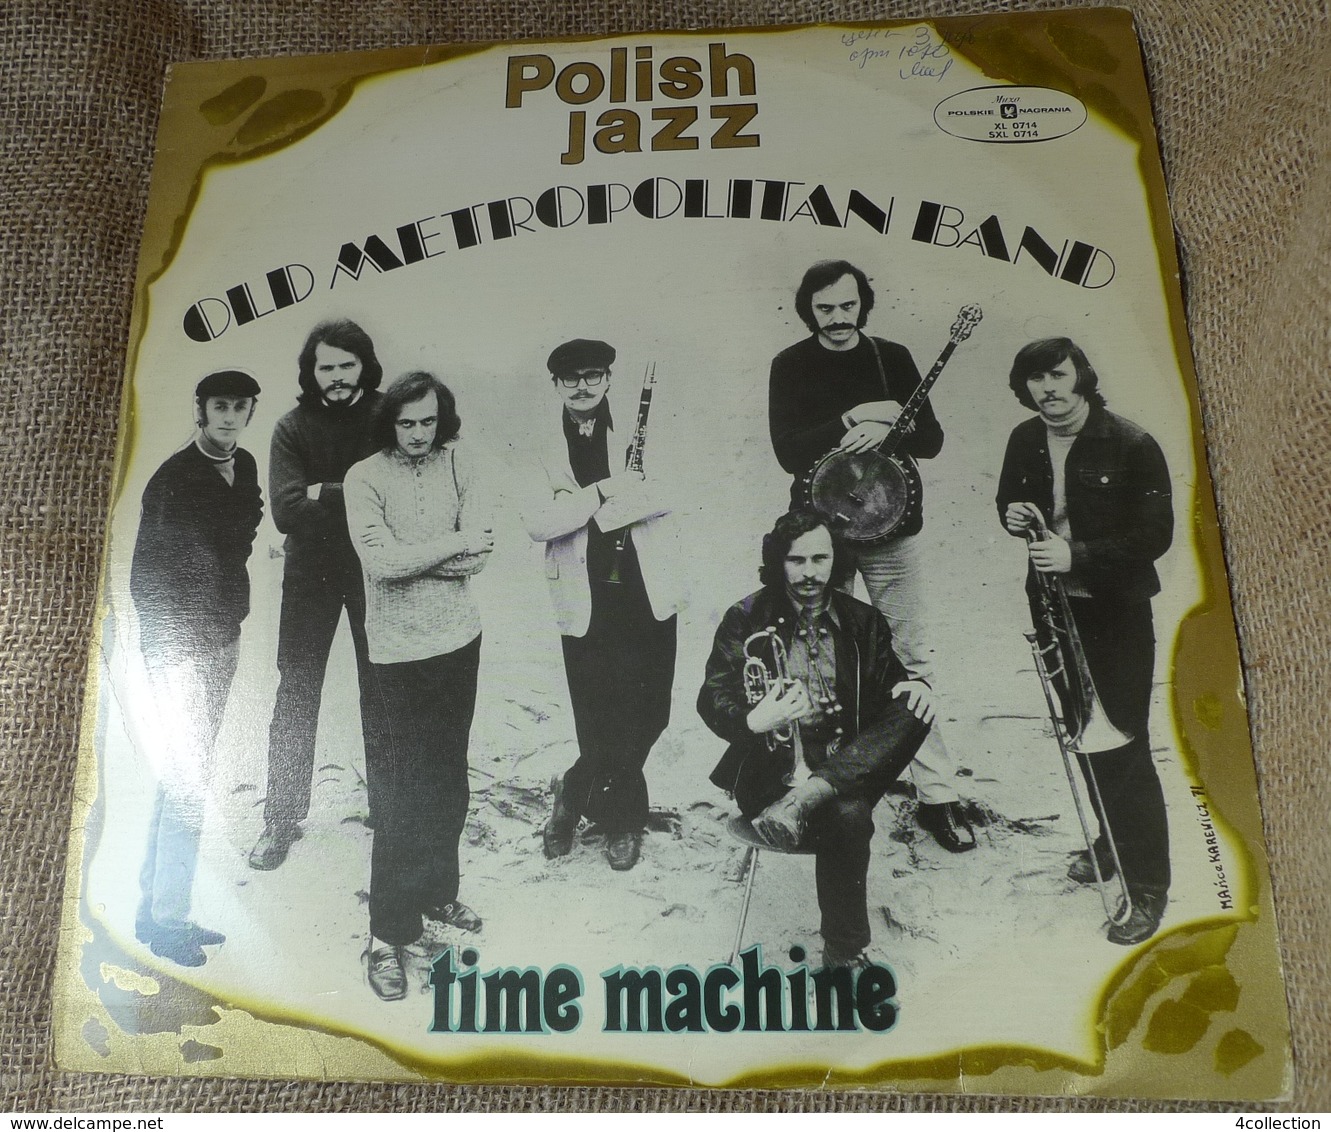 Vinyl Records Stereo 33 Rpm LP Polish JAZZ Old Metropolitan Band Time Machine Poland 1971 - Jazz